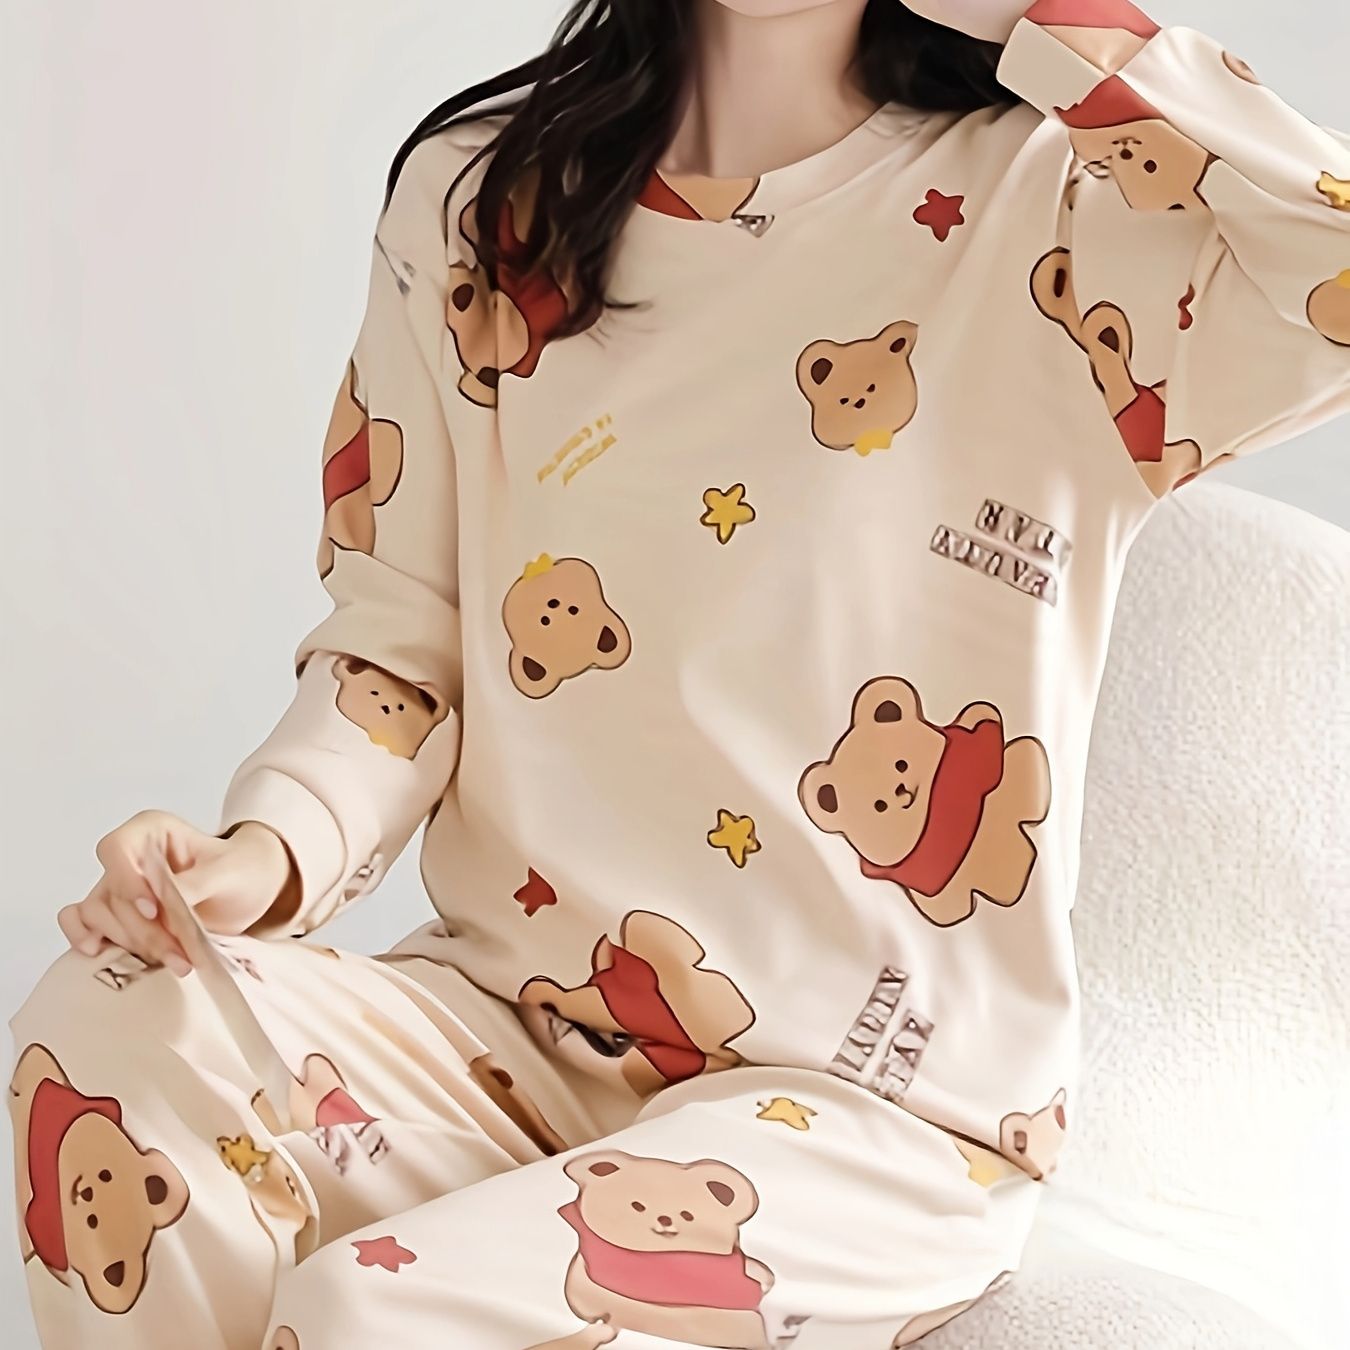 

Cute Bear & Letter Print Pajama Set, Long Sleeve Crew Neck Top & Elastic Pants, Women's Sleepwear & Loungewear - Perfect For Fall